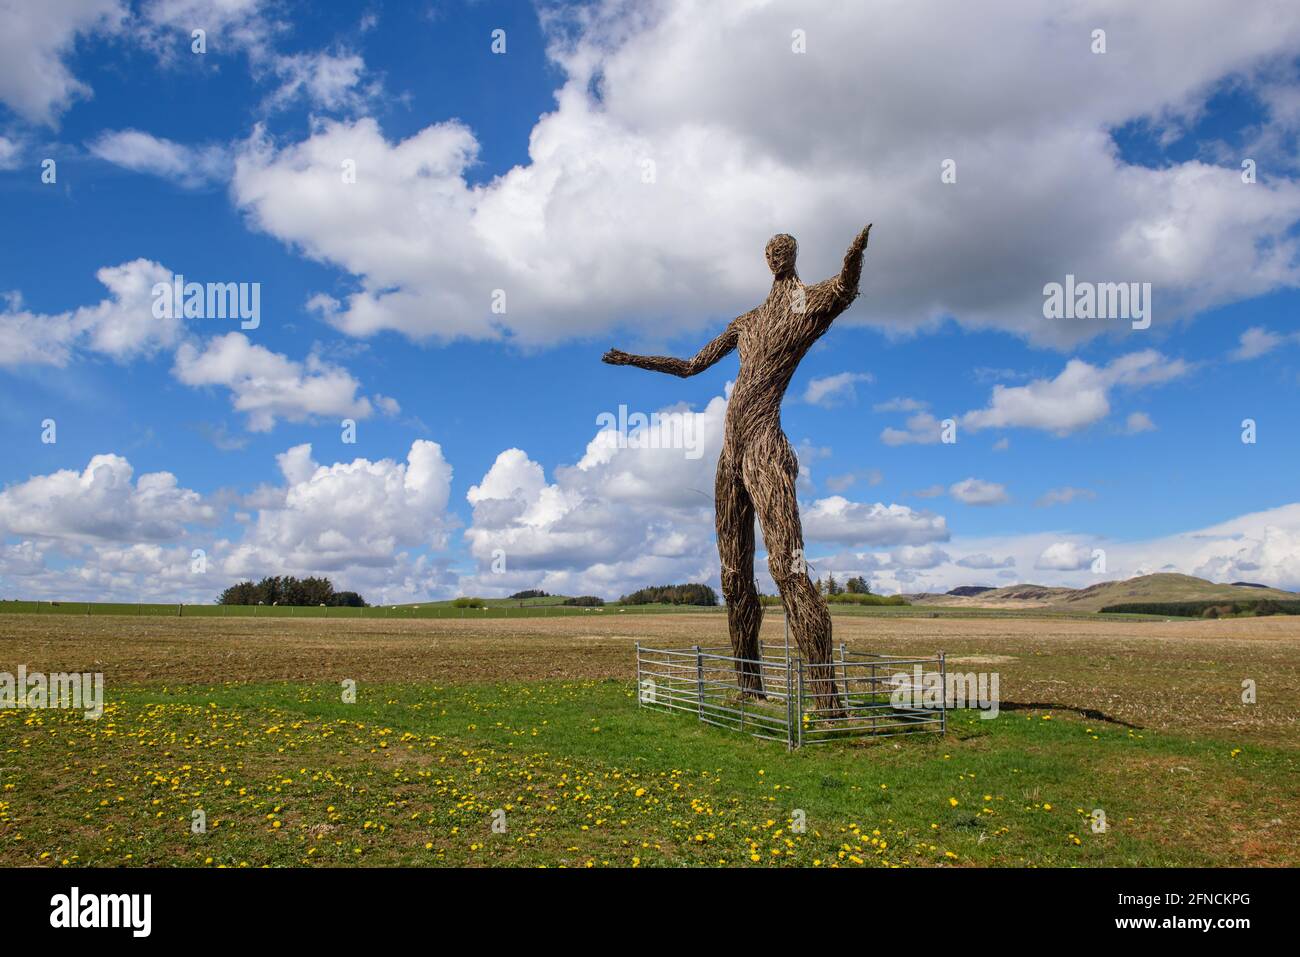 The Wicker man sculpture at East Kirkcarsewell Farm near Kirkcudbright. Scotland Stock Photo